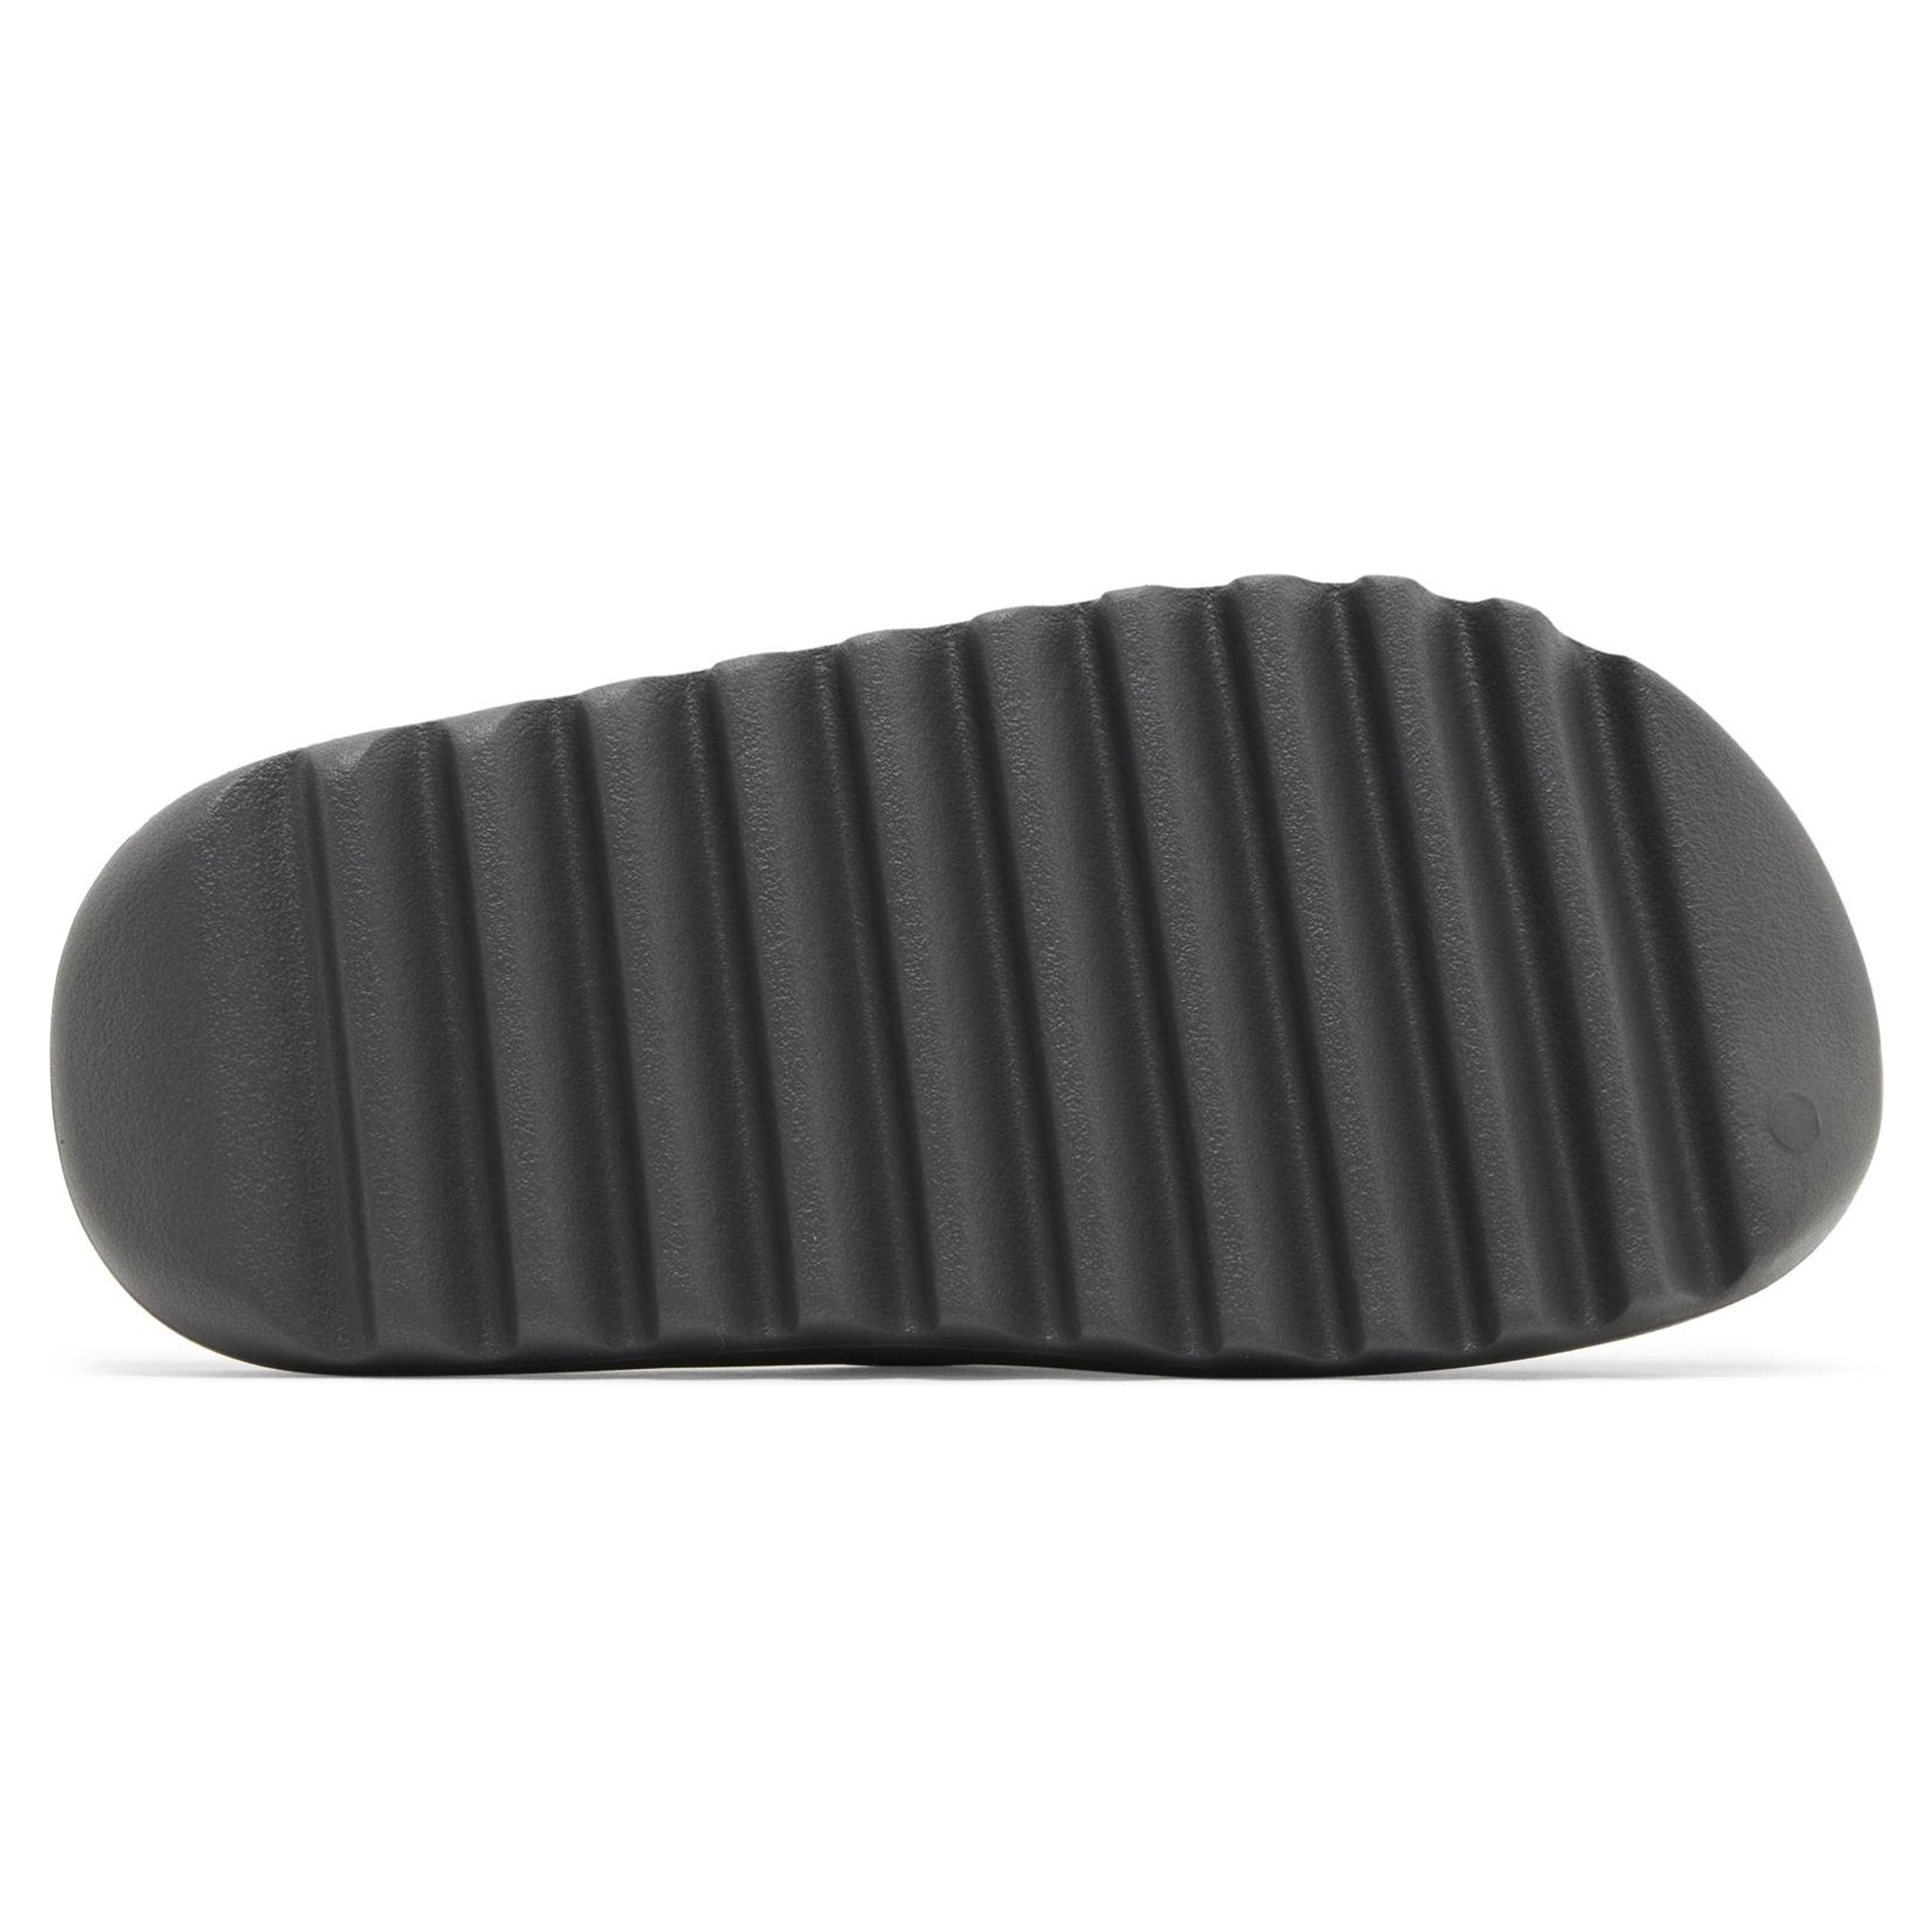 Sole view of Adidas Yeezy Slide Granite ID4132